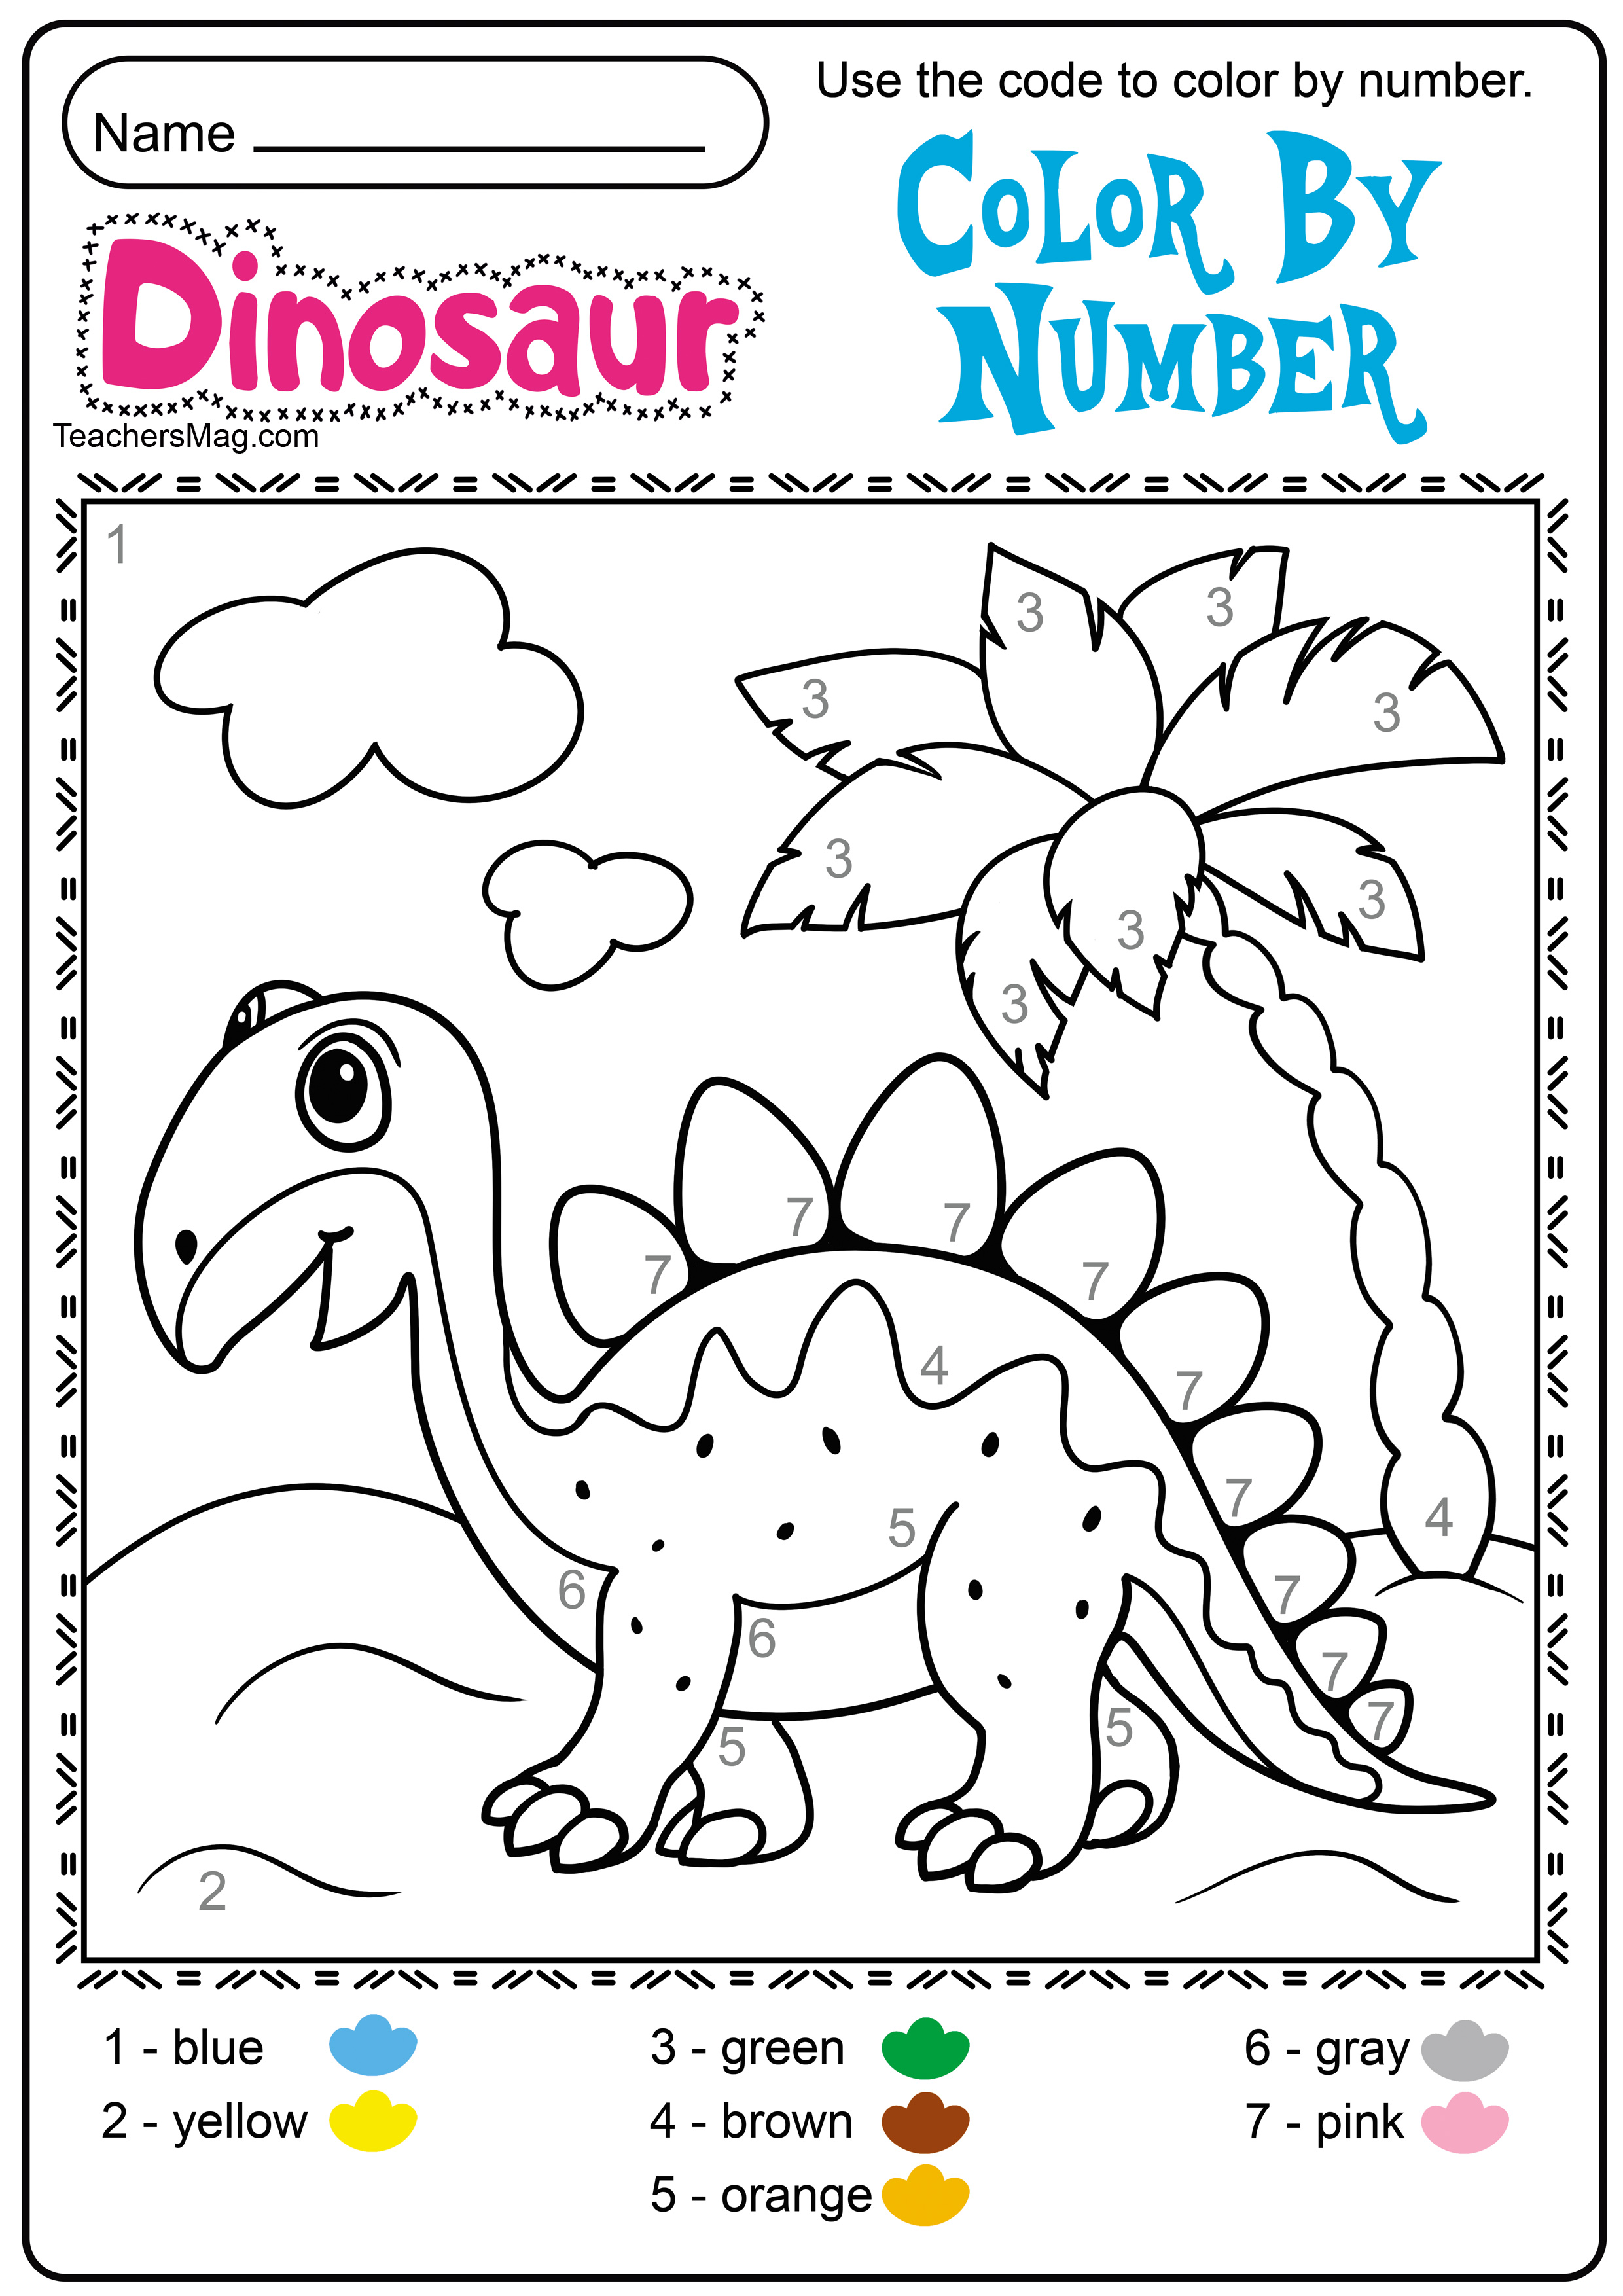 Free Dinosaur Printables for Preschool   TeachersMag.com